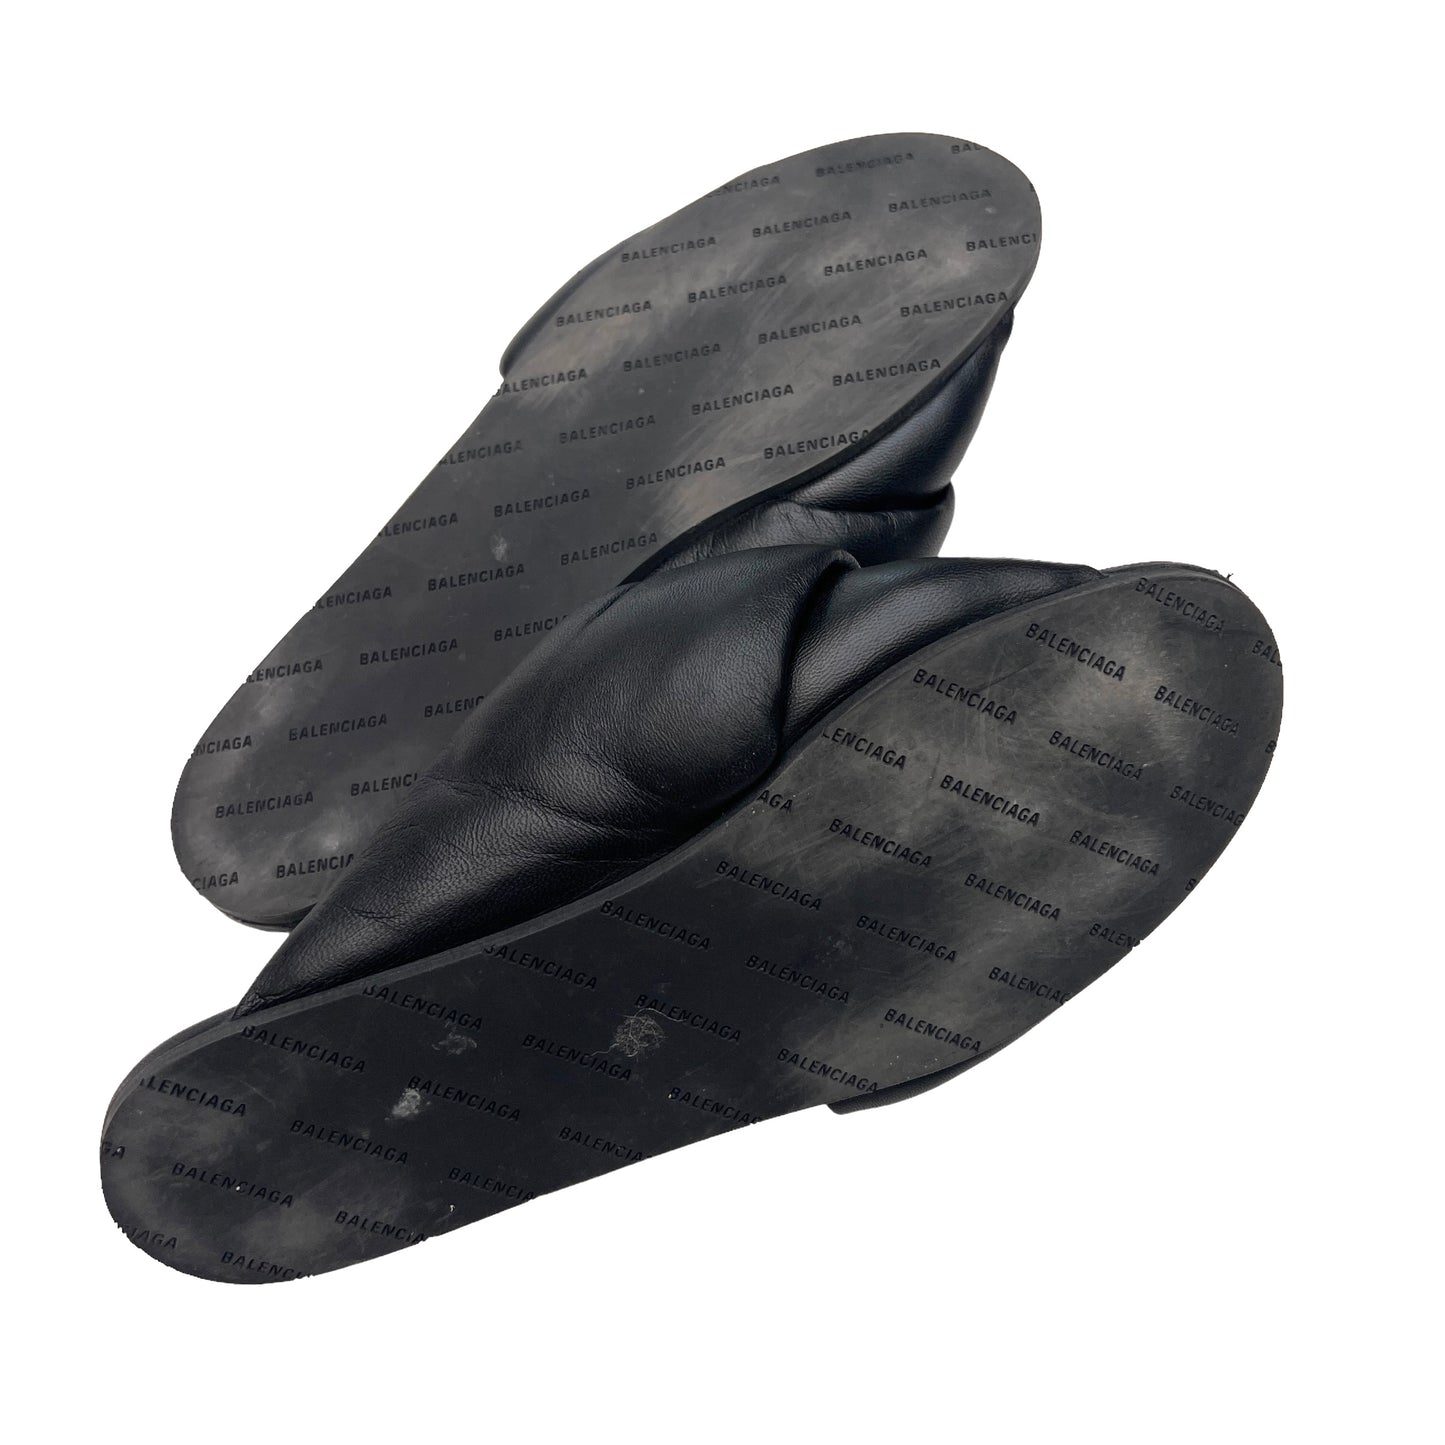 Black Padded Leather Slides - 7.5